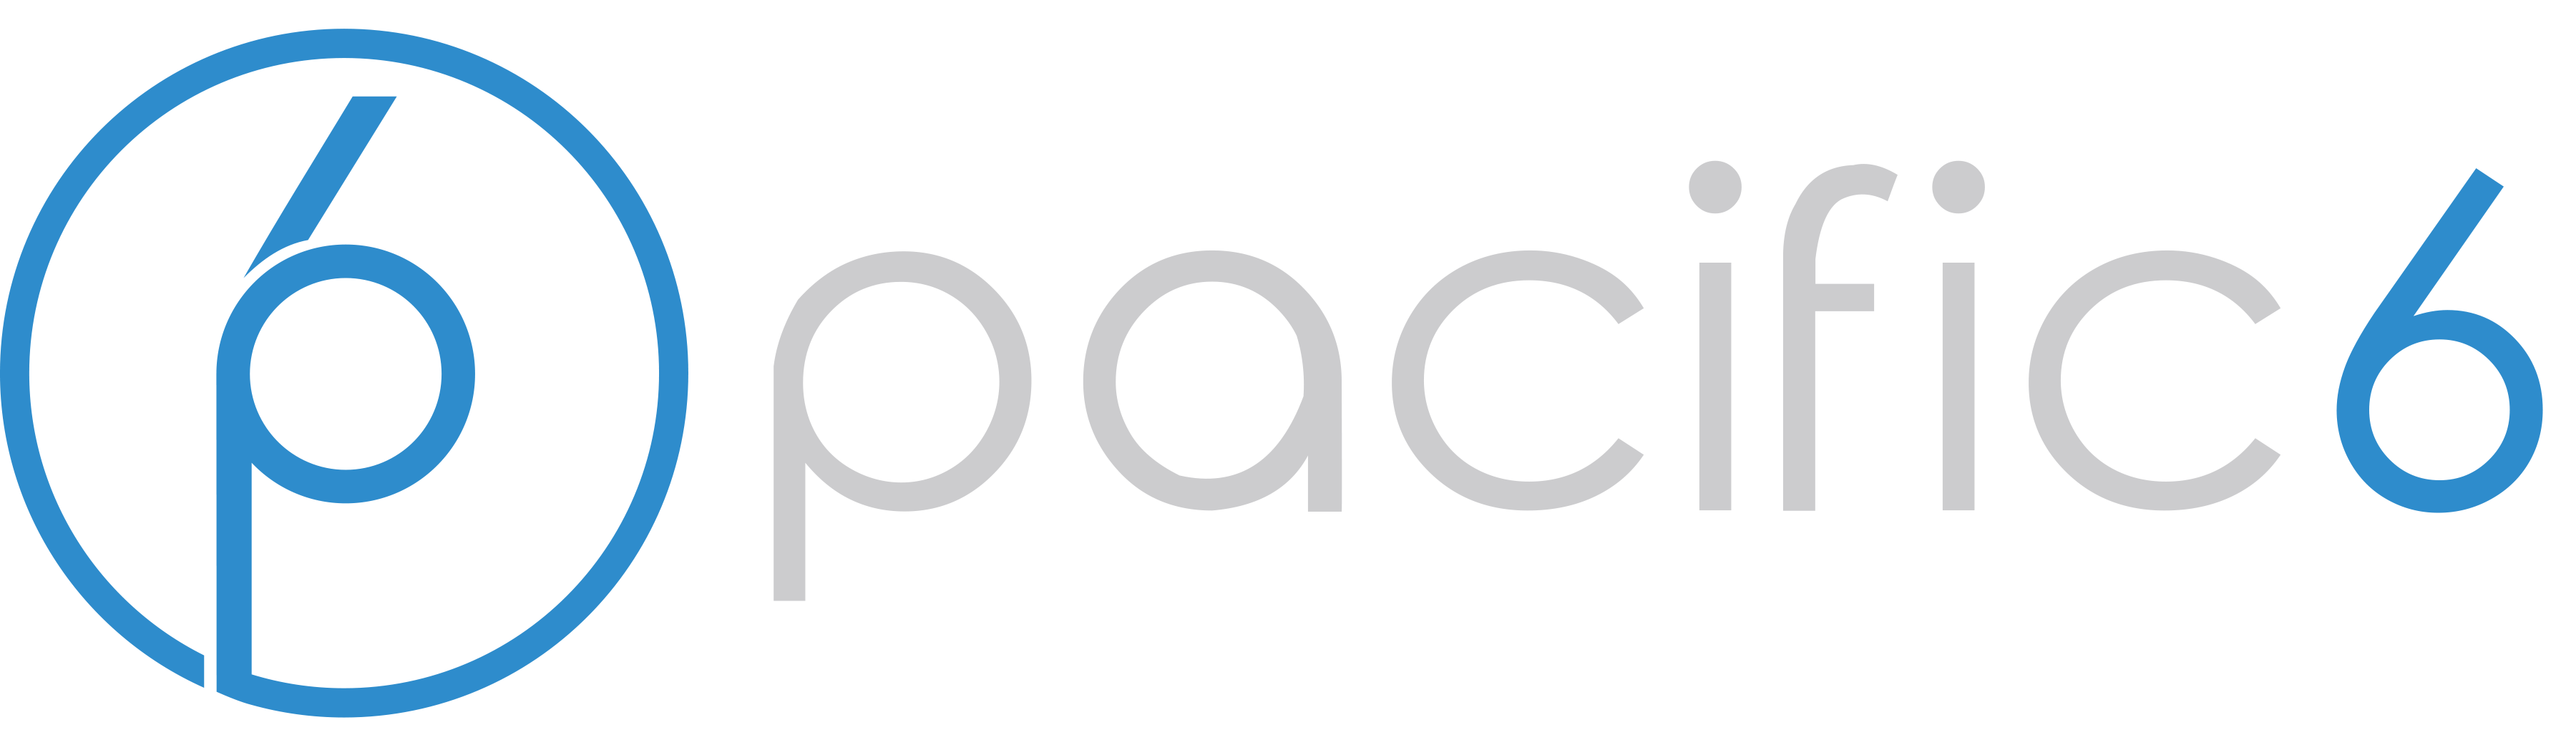 Pacific6 logo